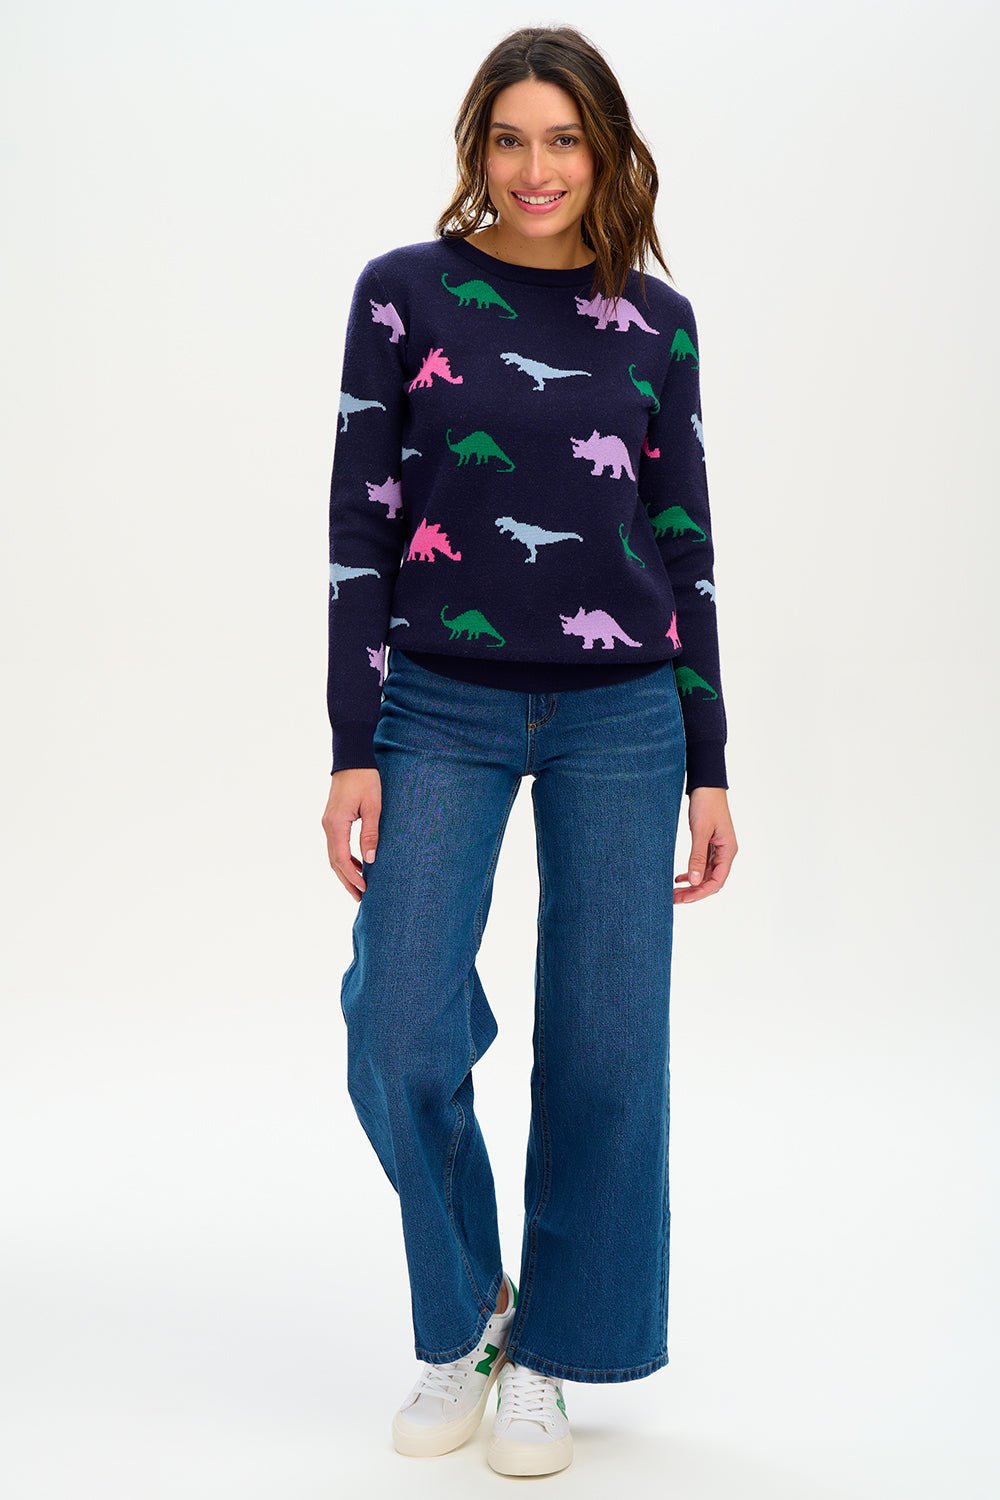 Lizzie Jumper - Dinosaur Jive - Rockamilly-Knitwear-Vintage